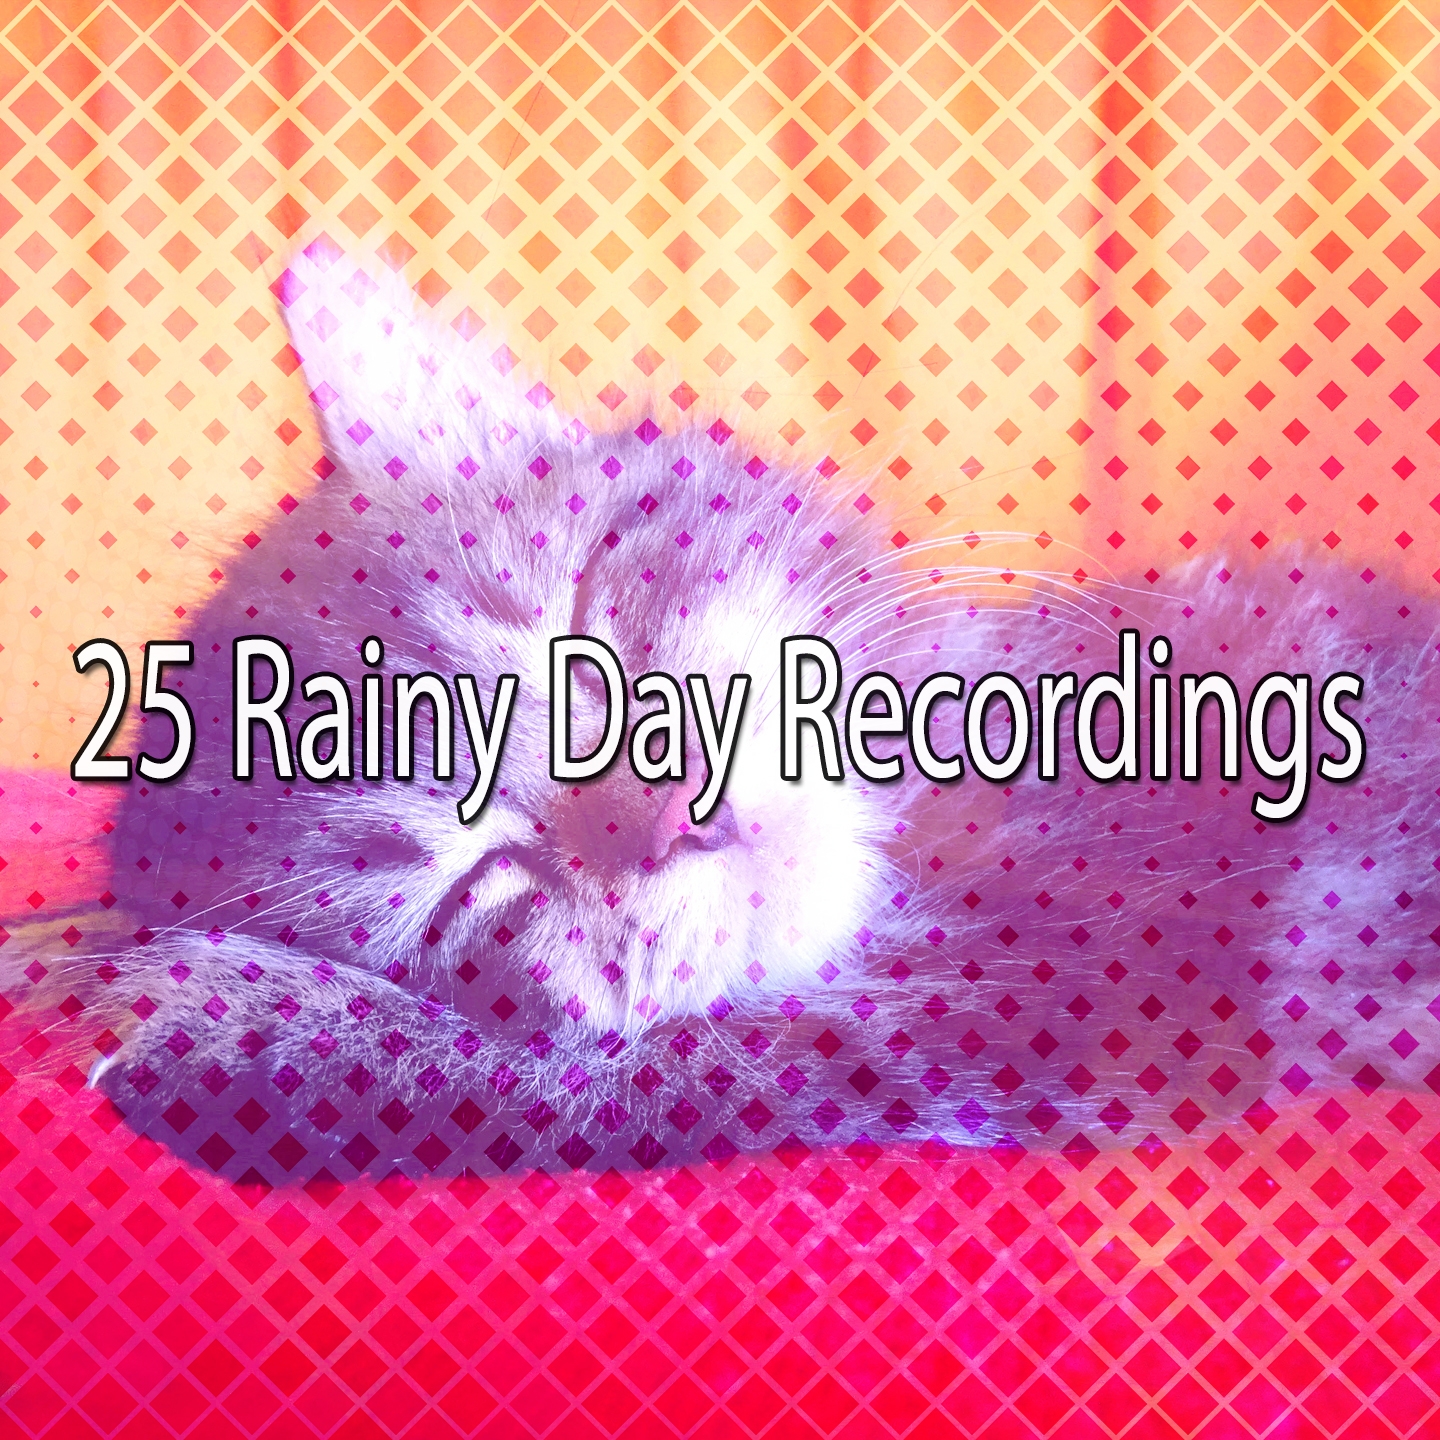 25 Rainy Day Recordings